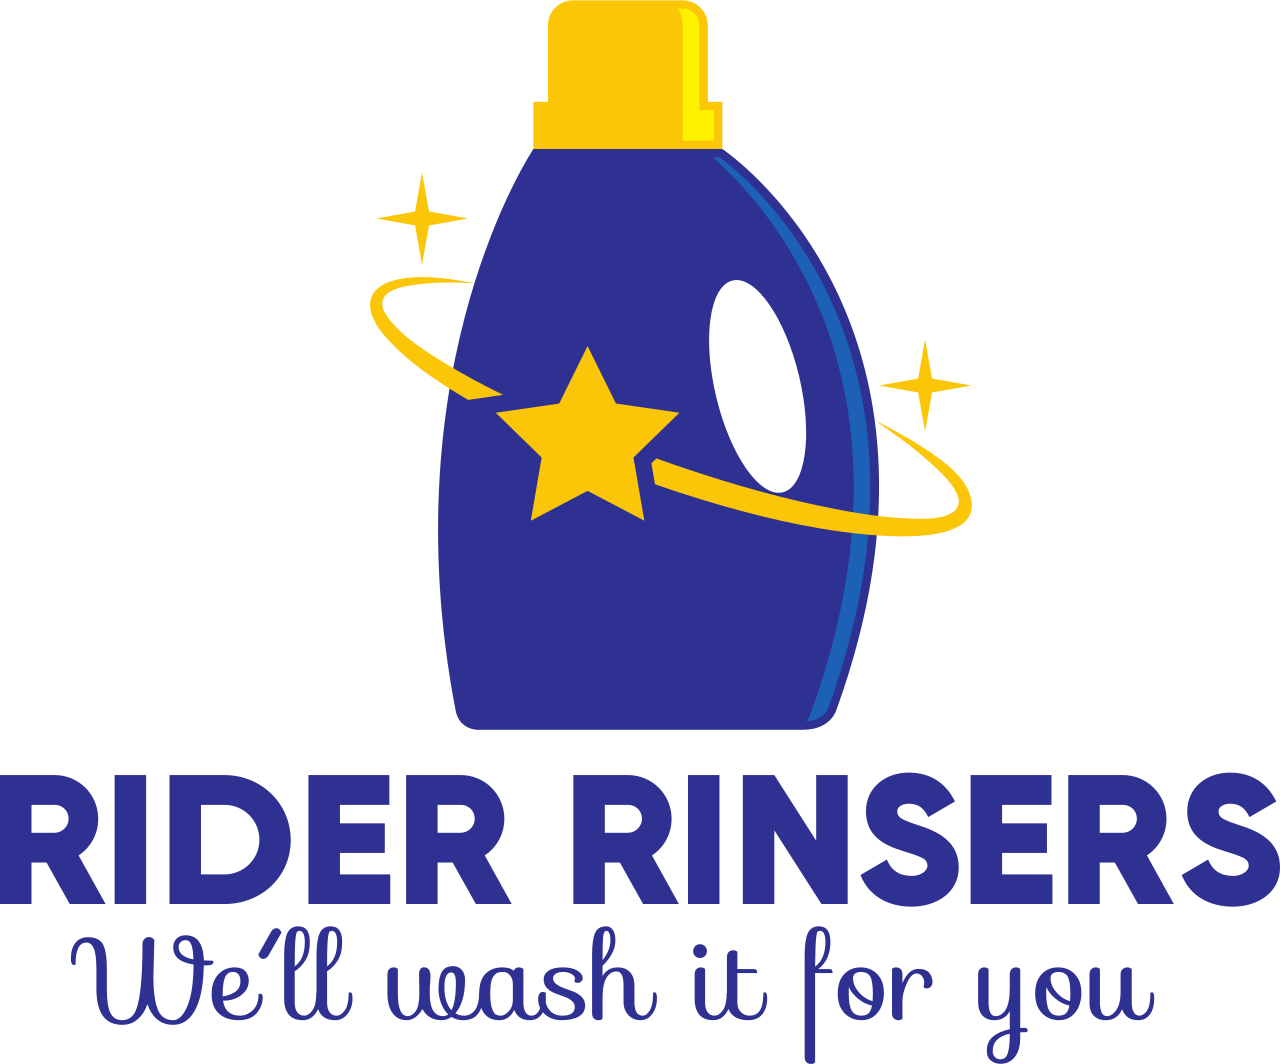 Rider Rinsers's logo